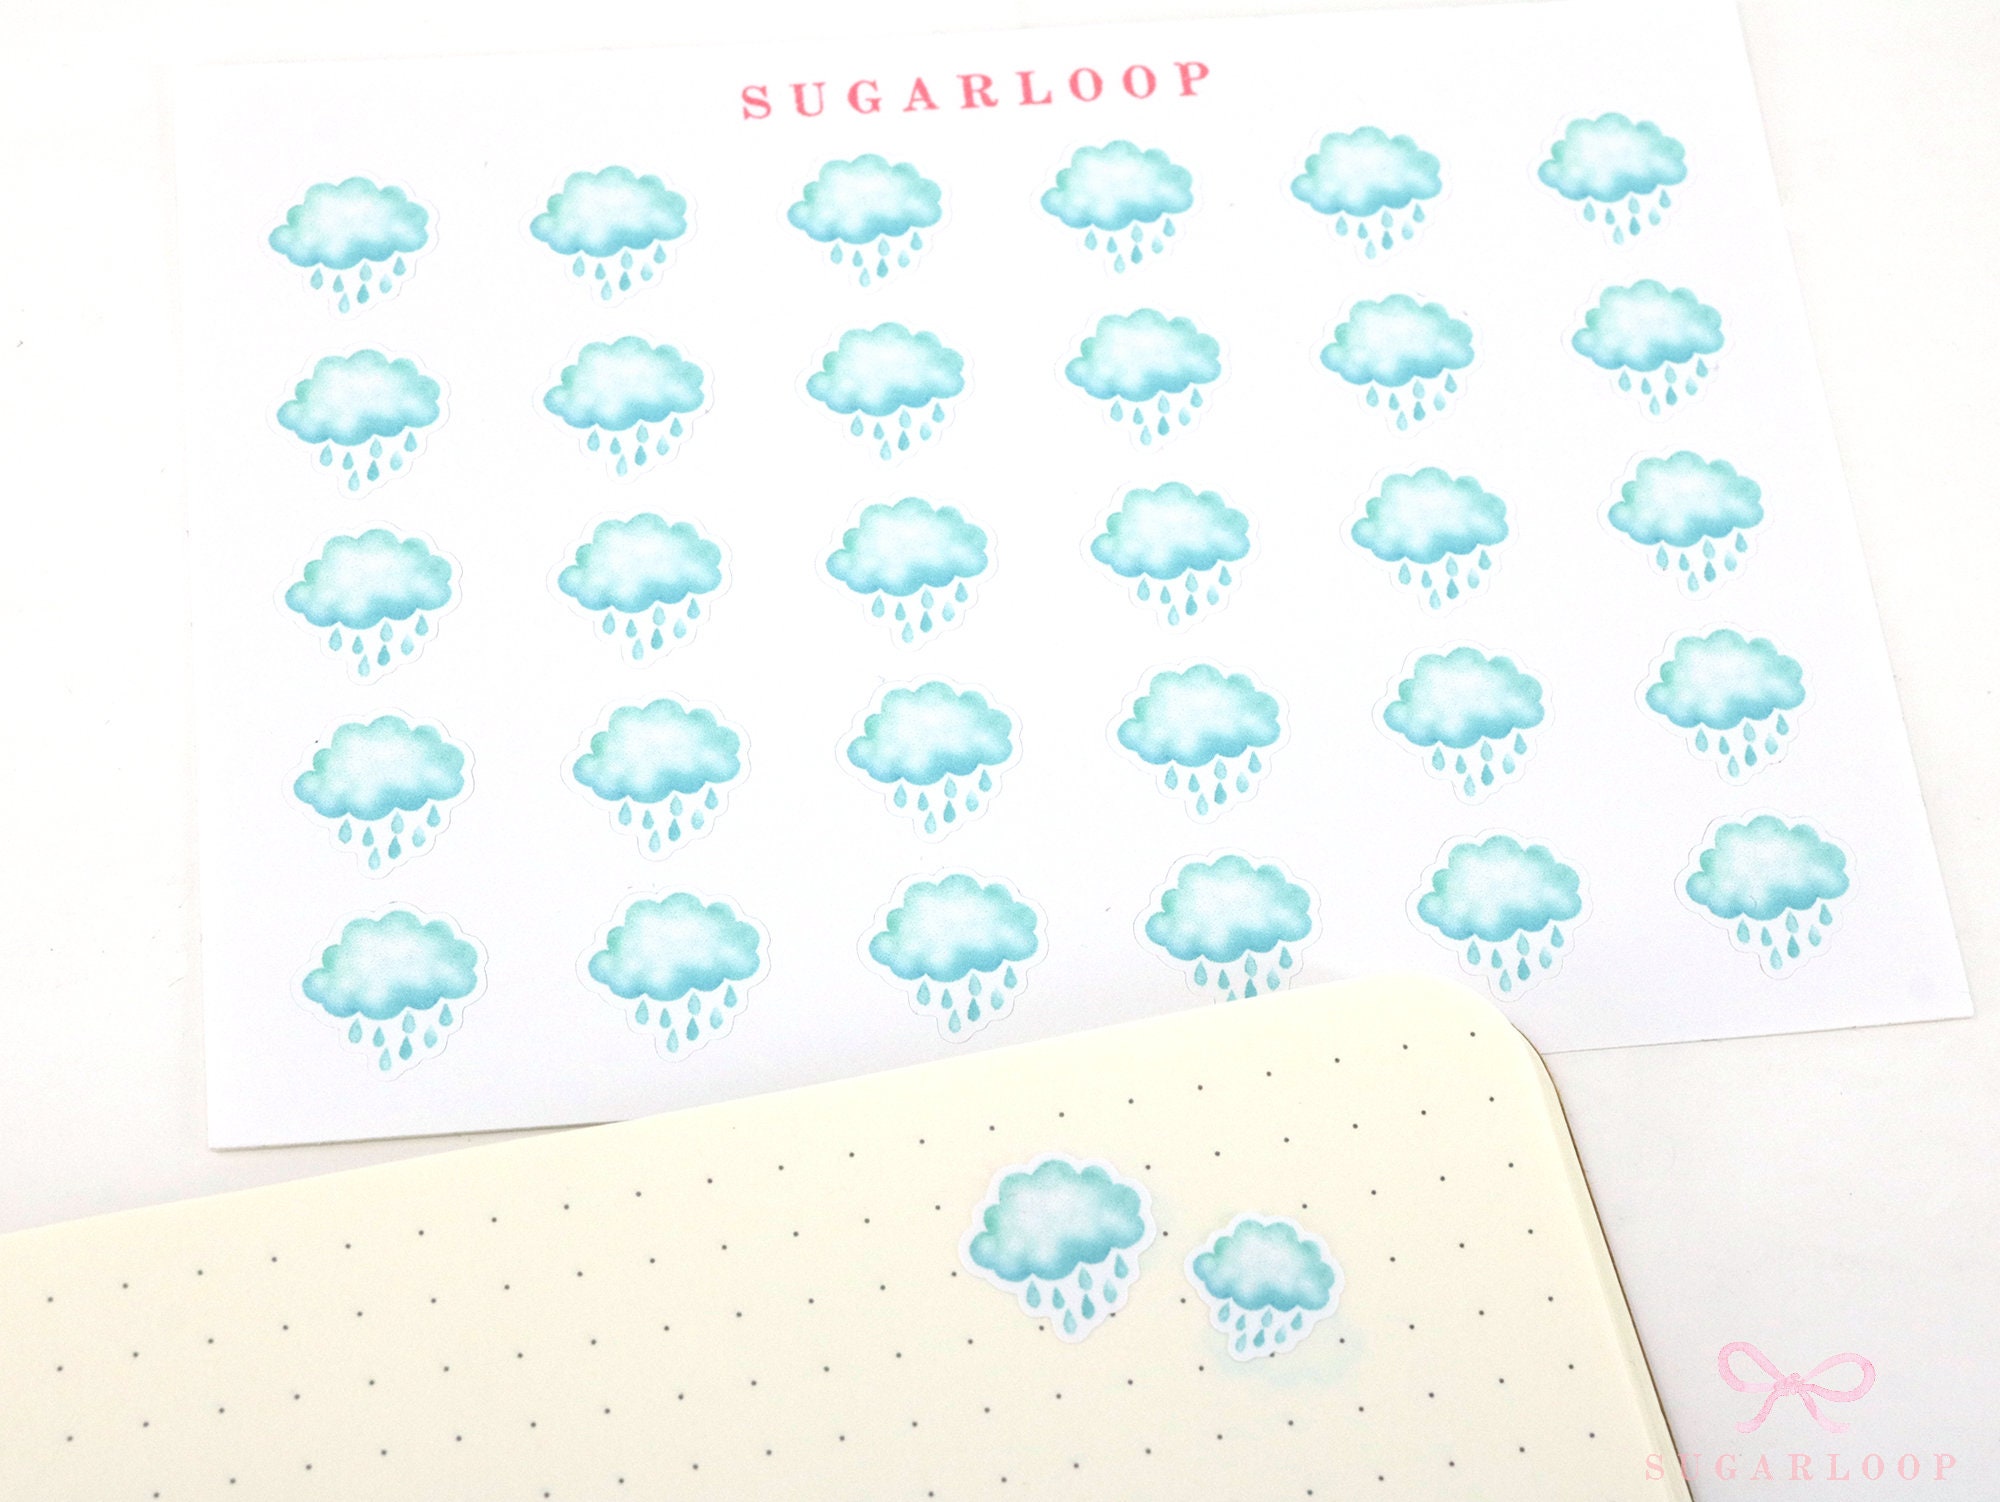 Bujo journal calendar months gray stickersheet Sticker for Sale by  Between-clouds